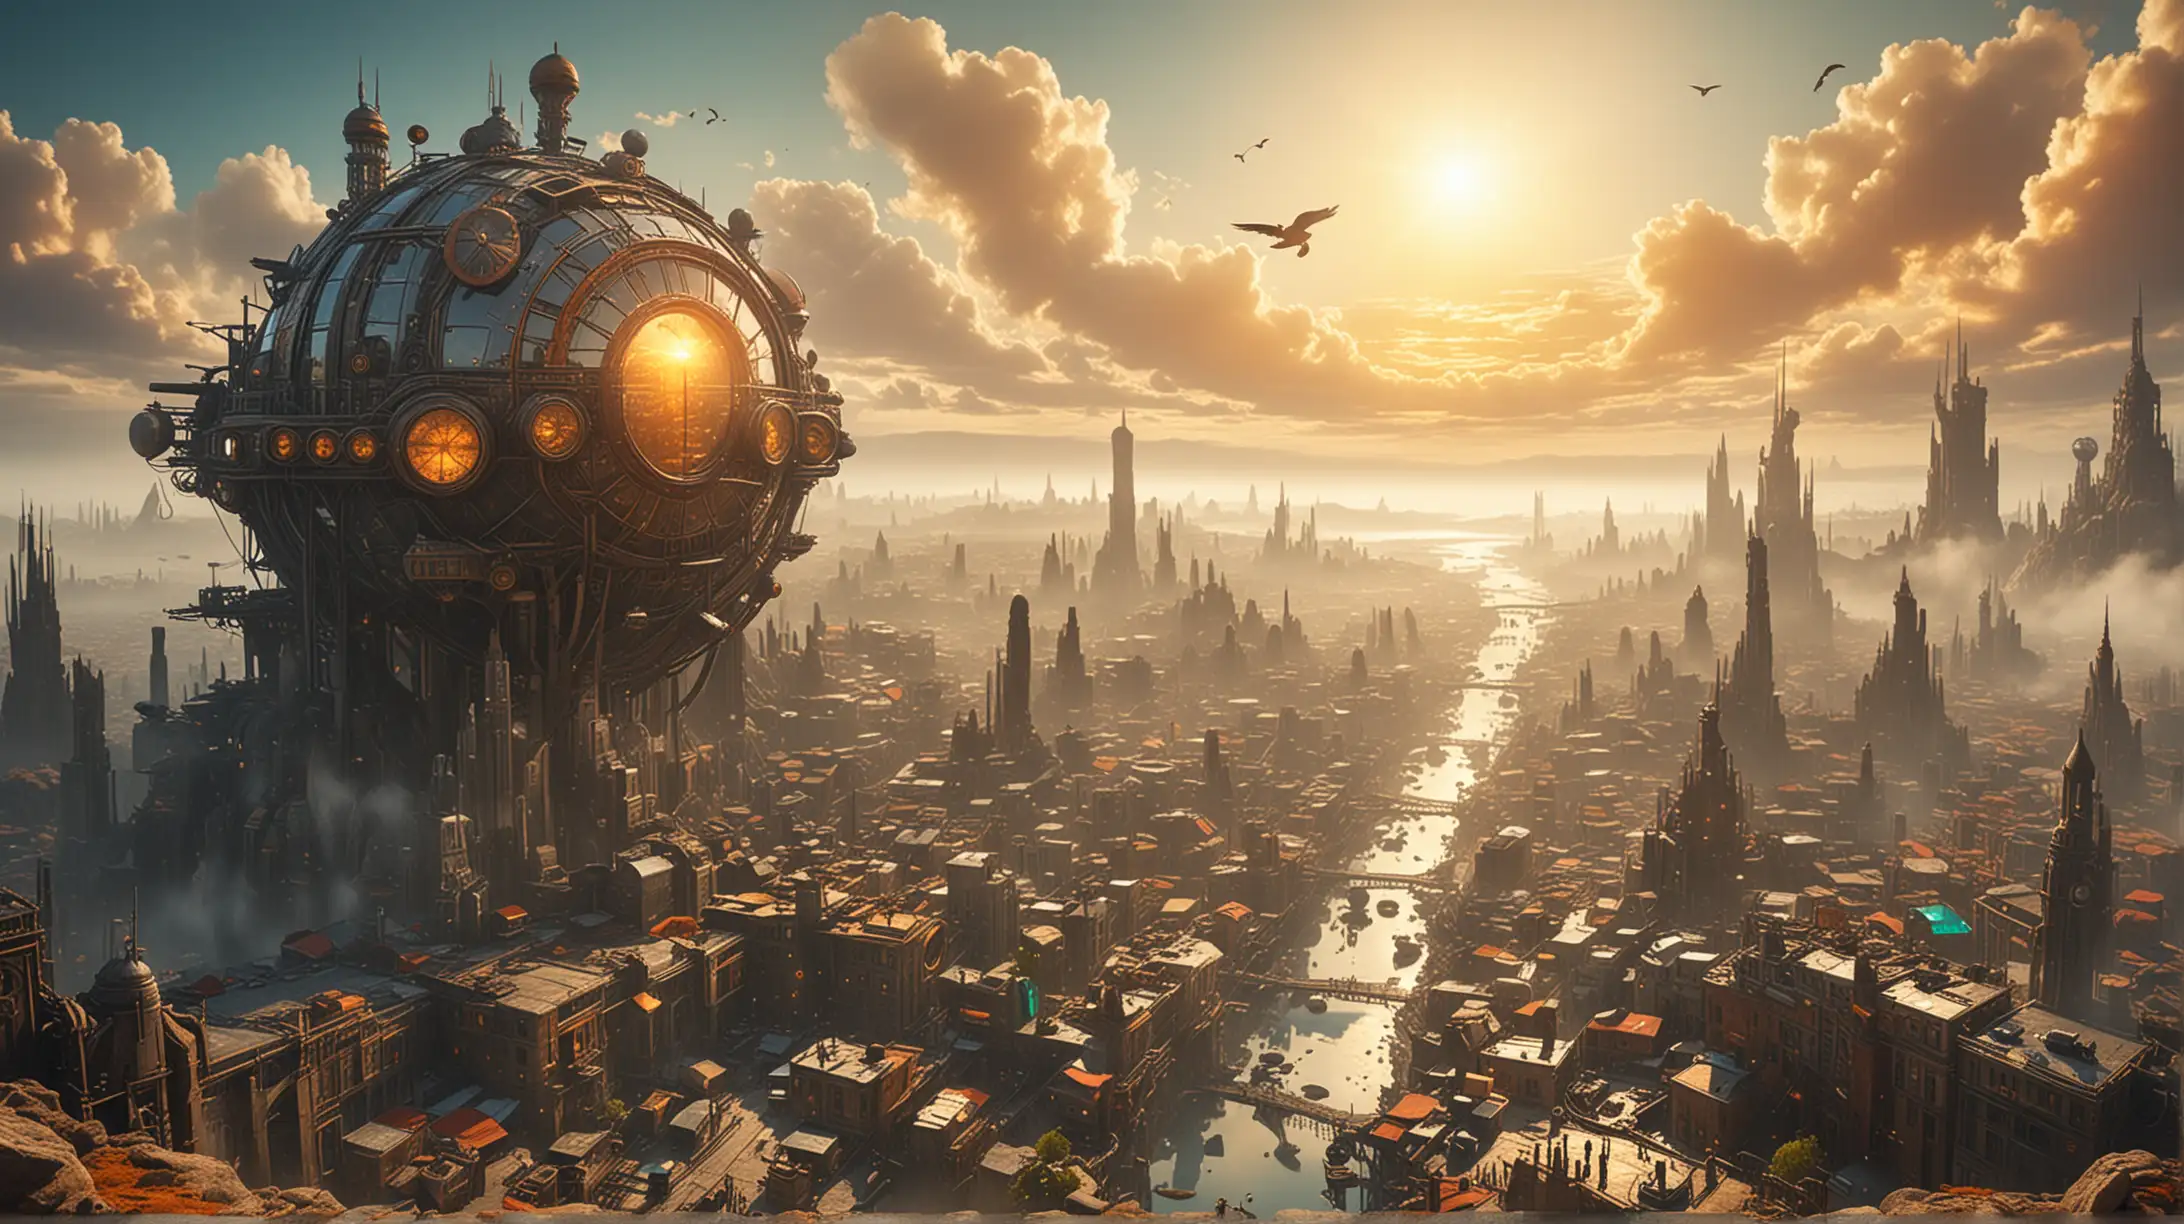 Steampunk Cityscape Futuristic Metropolis on an Alien World